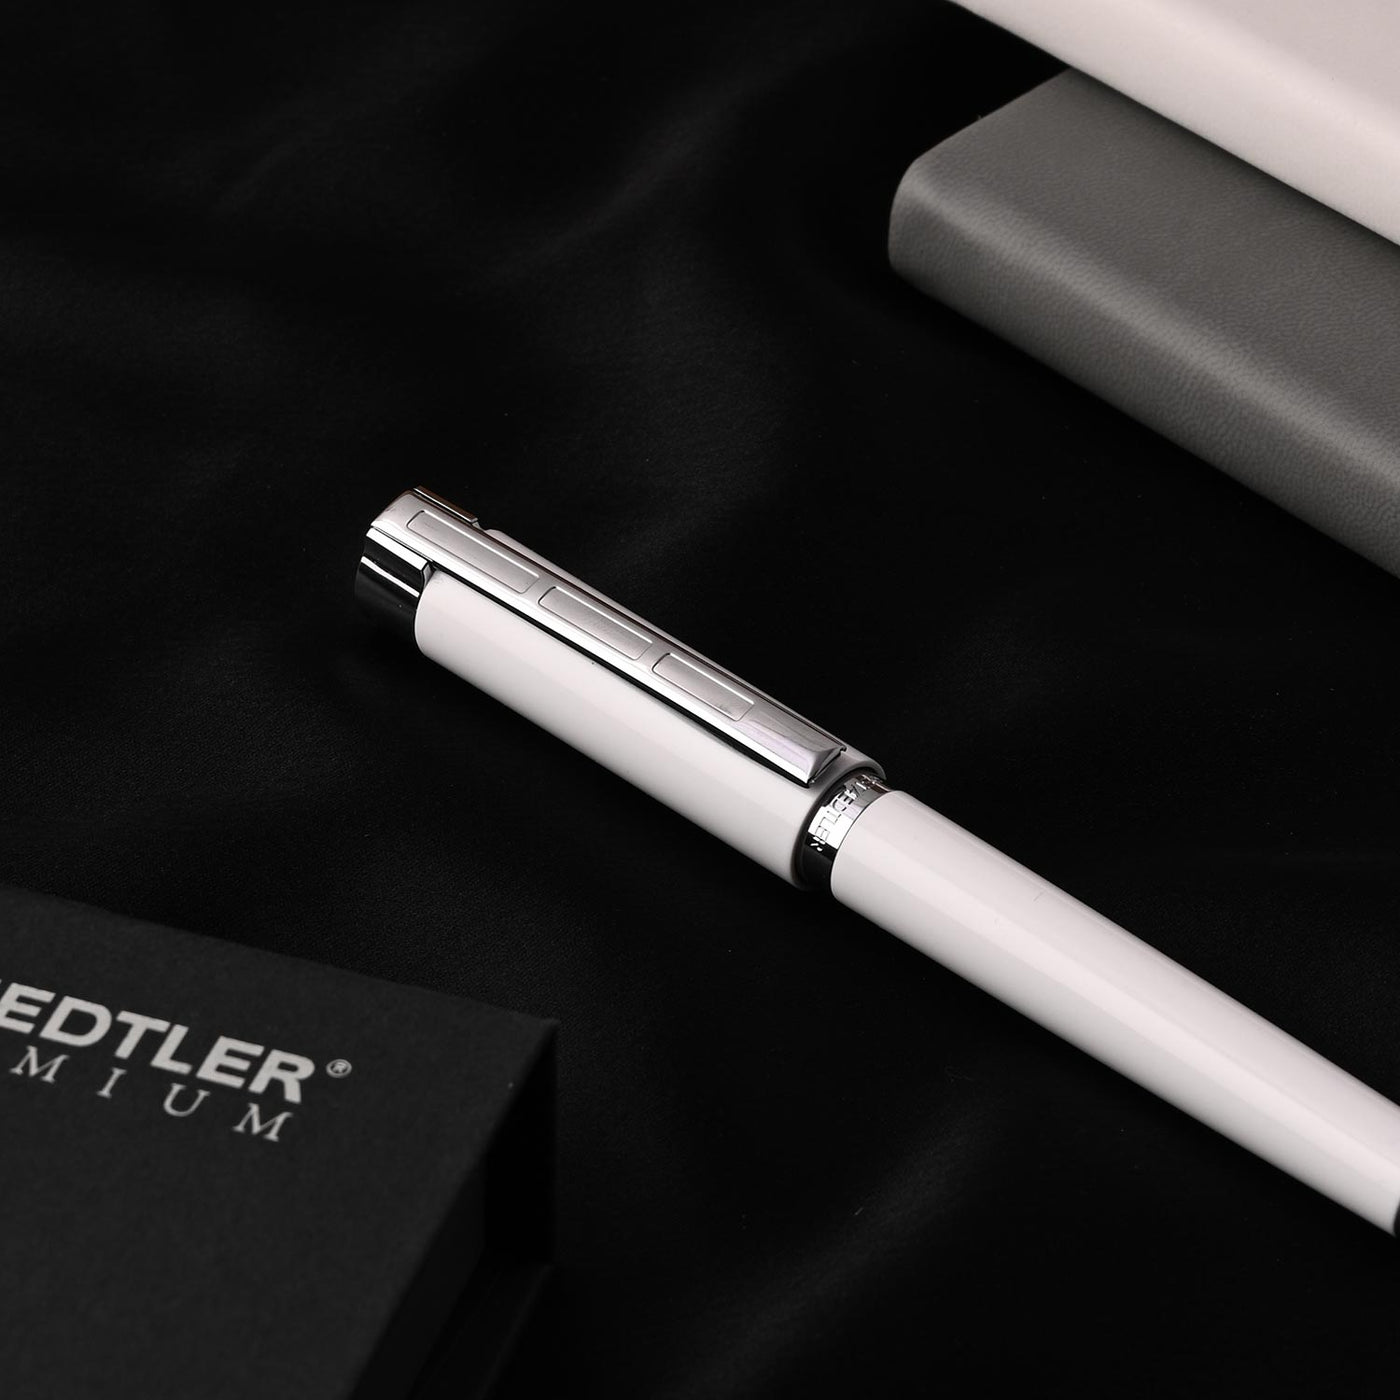 Staedtler Premium Resina Fountain Pen - White CT